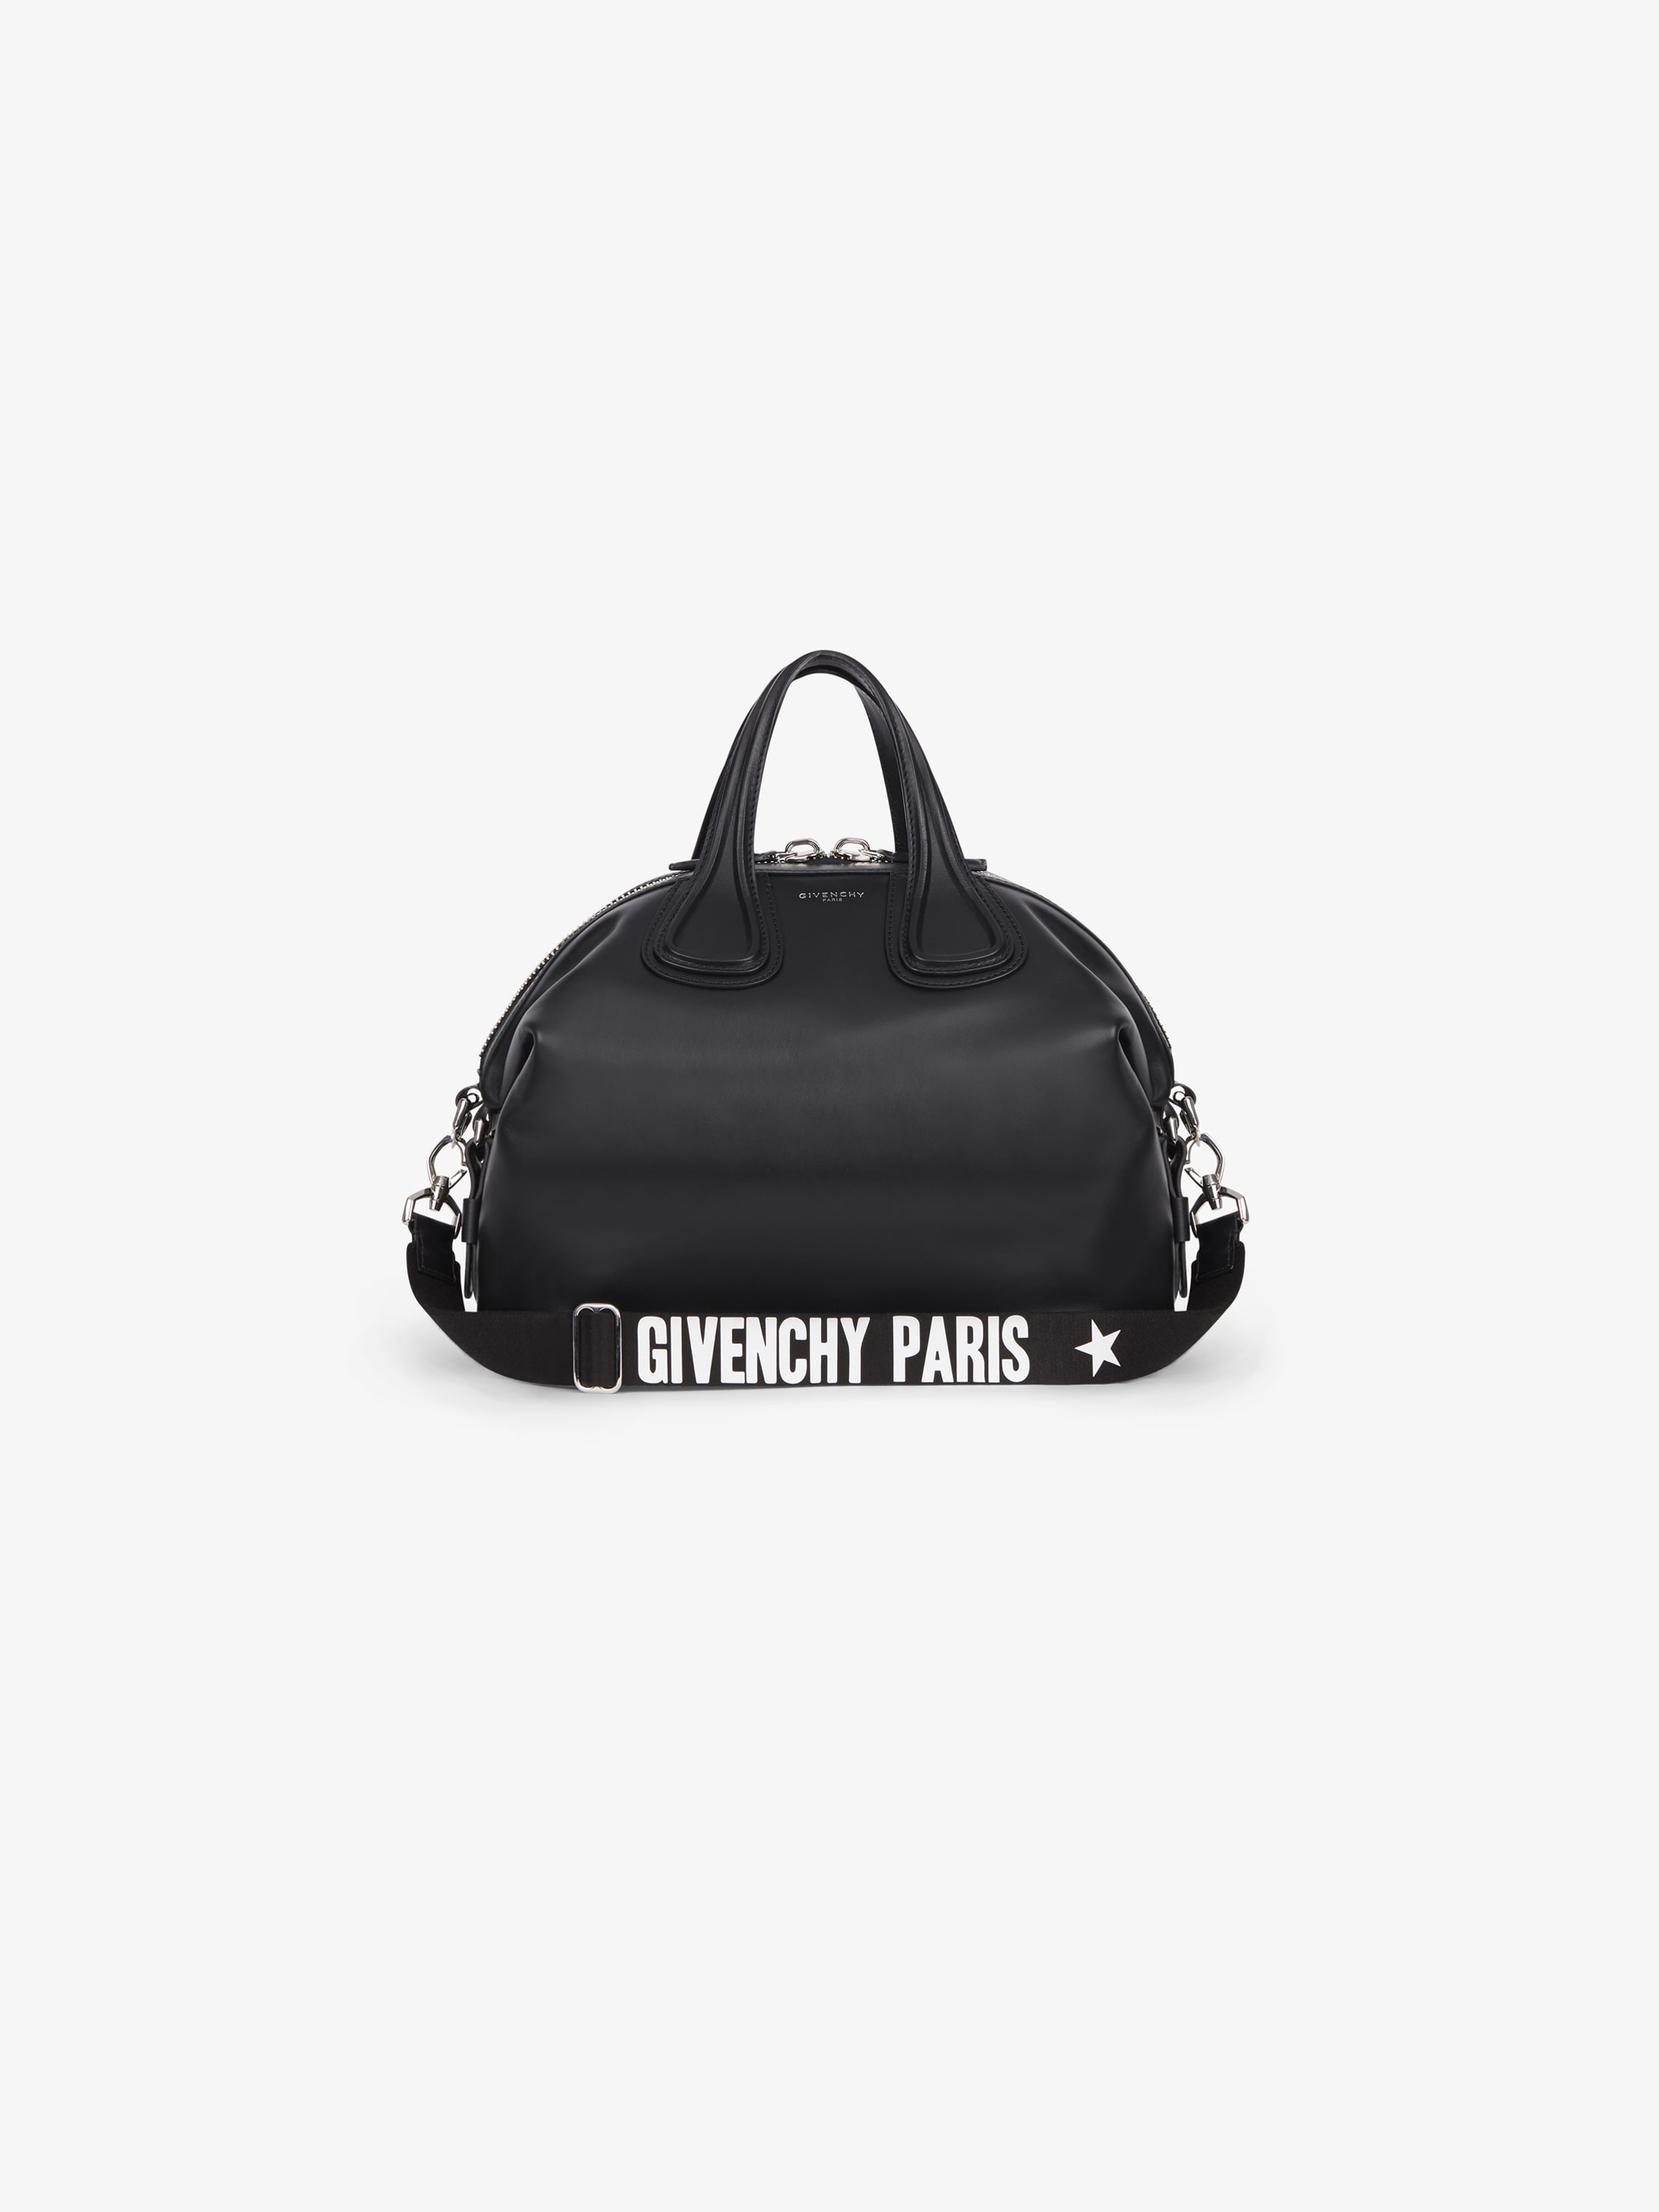 givenchy paris bag